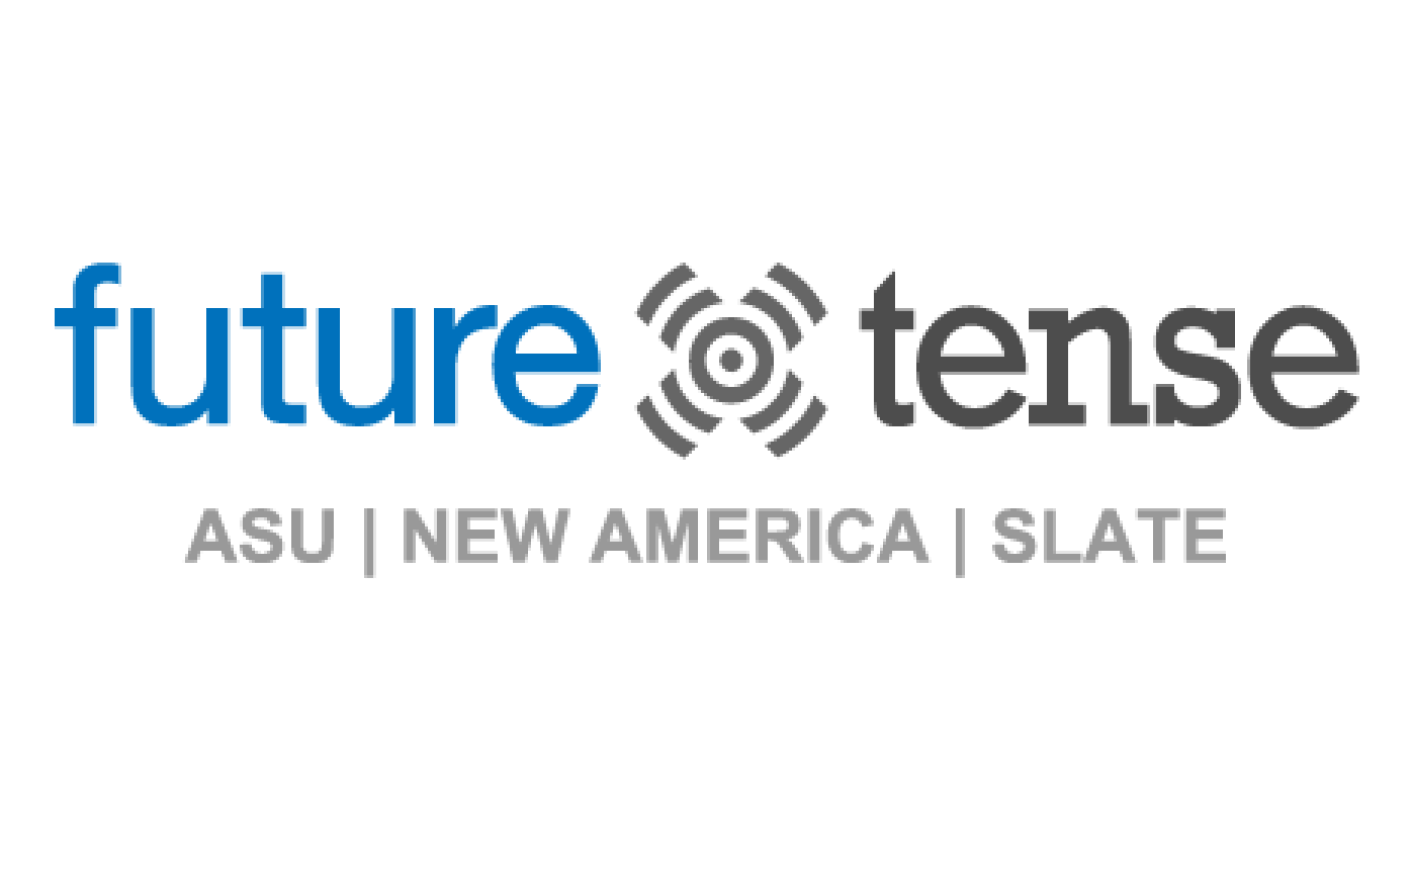 Future Tense Logo